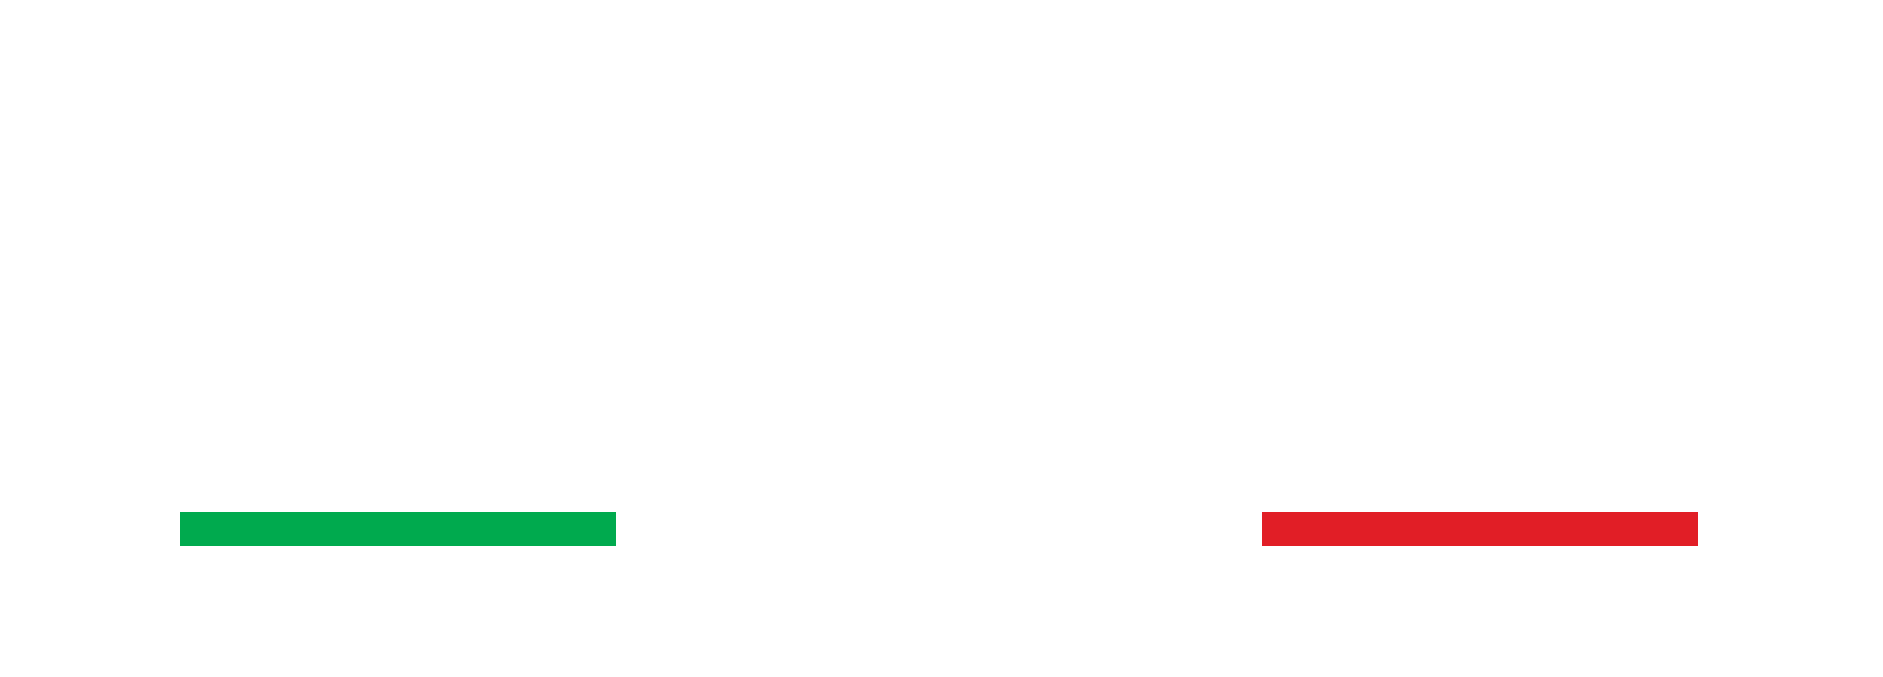 giorgioslogo pizza white